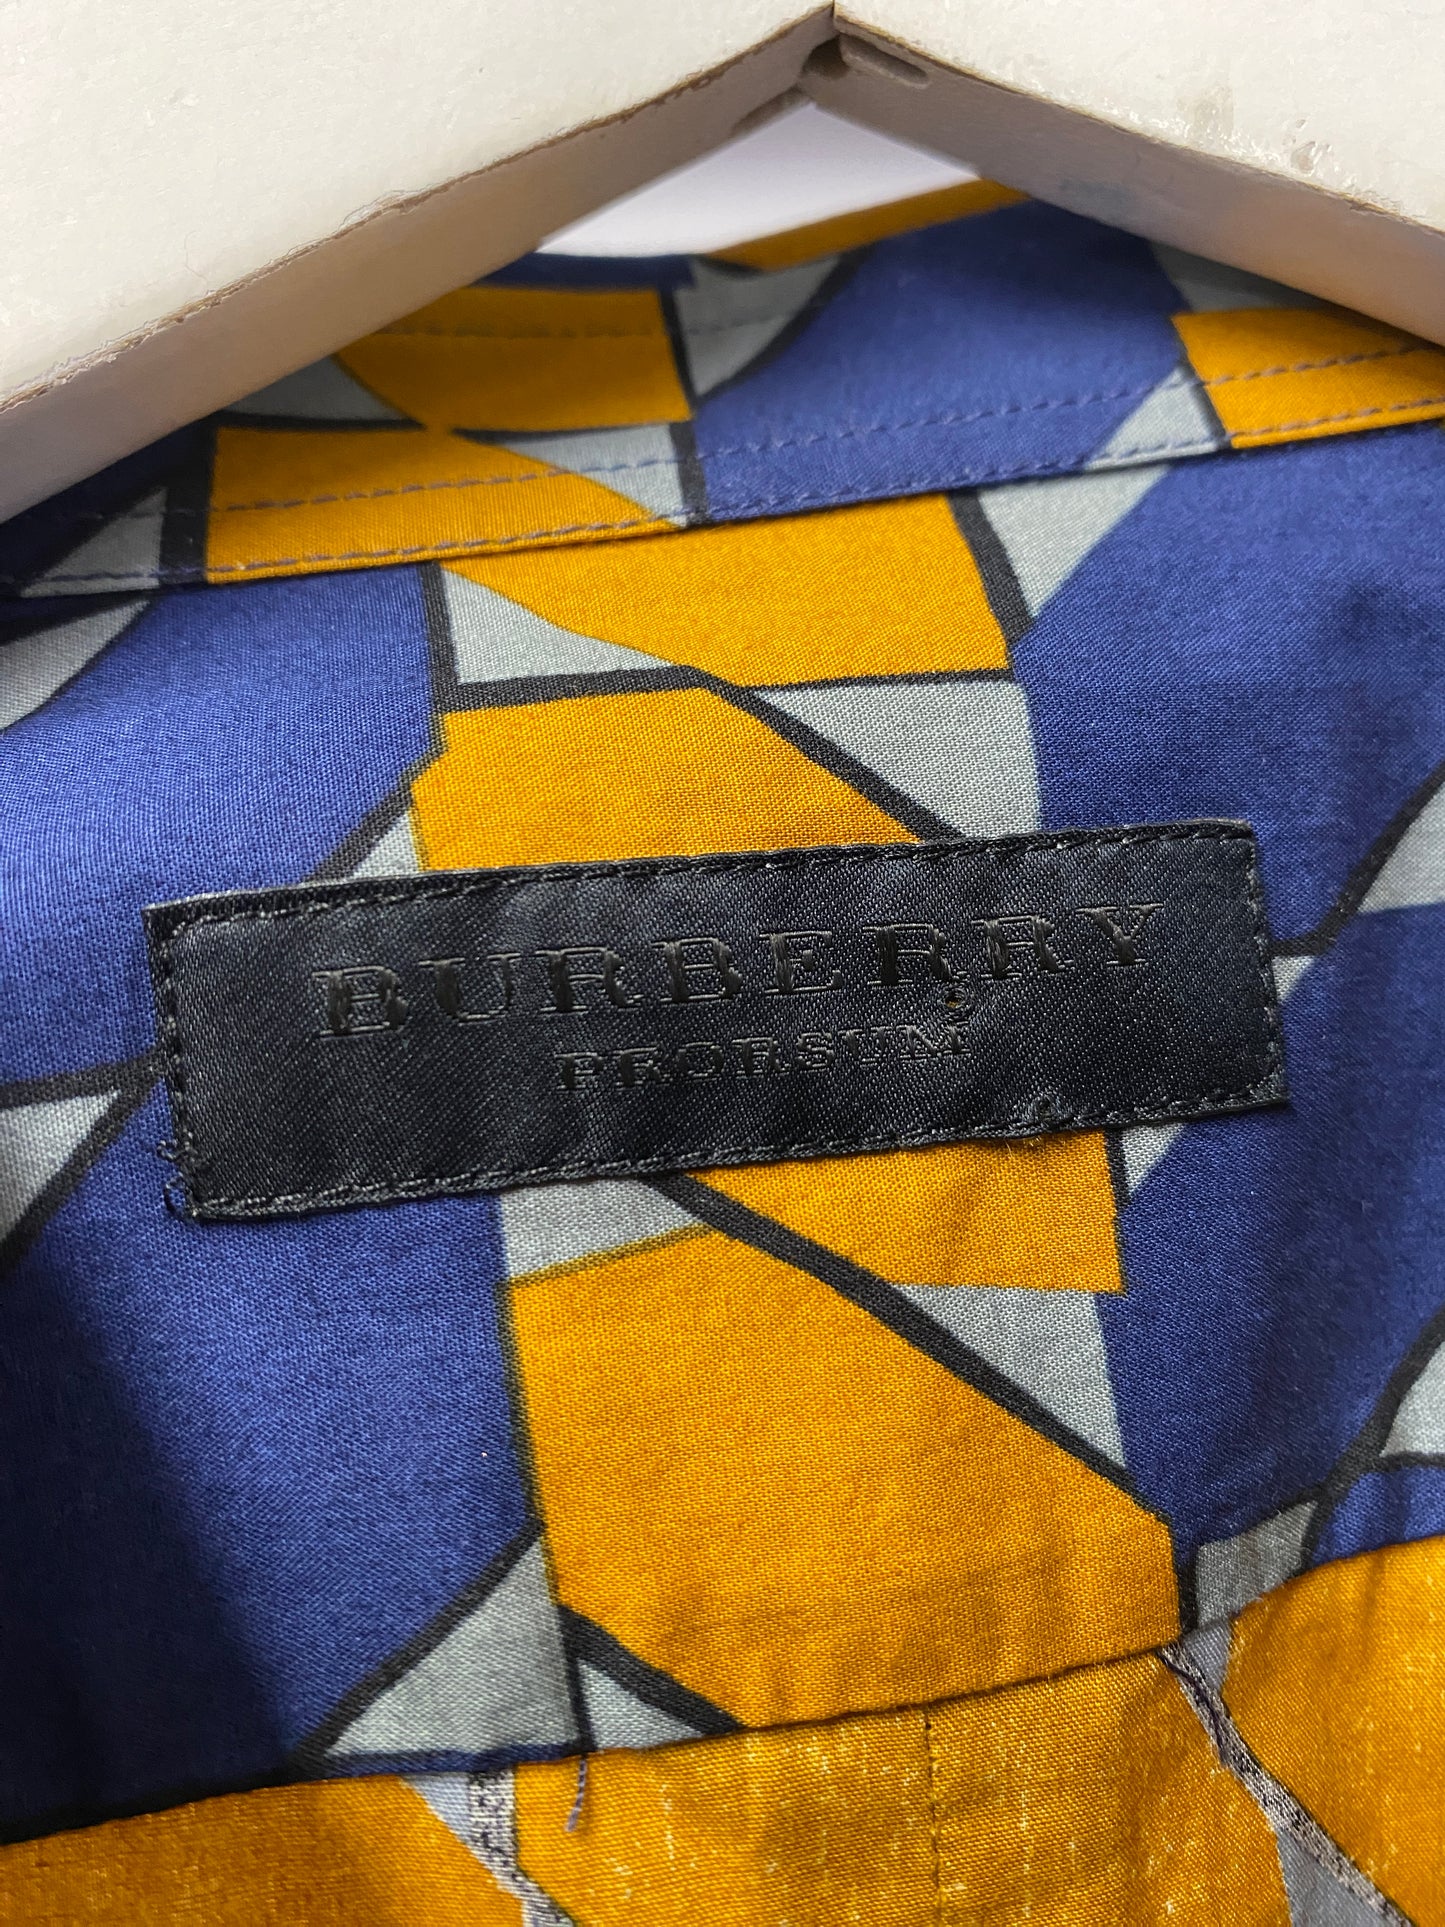 Burberry Porsum Blue and Yellow Abstract Cotton Shirt Runway AW 12/13 RARE Small